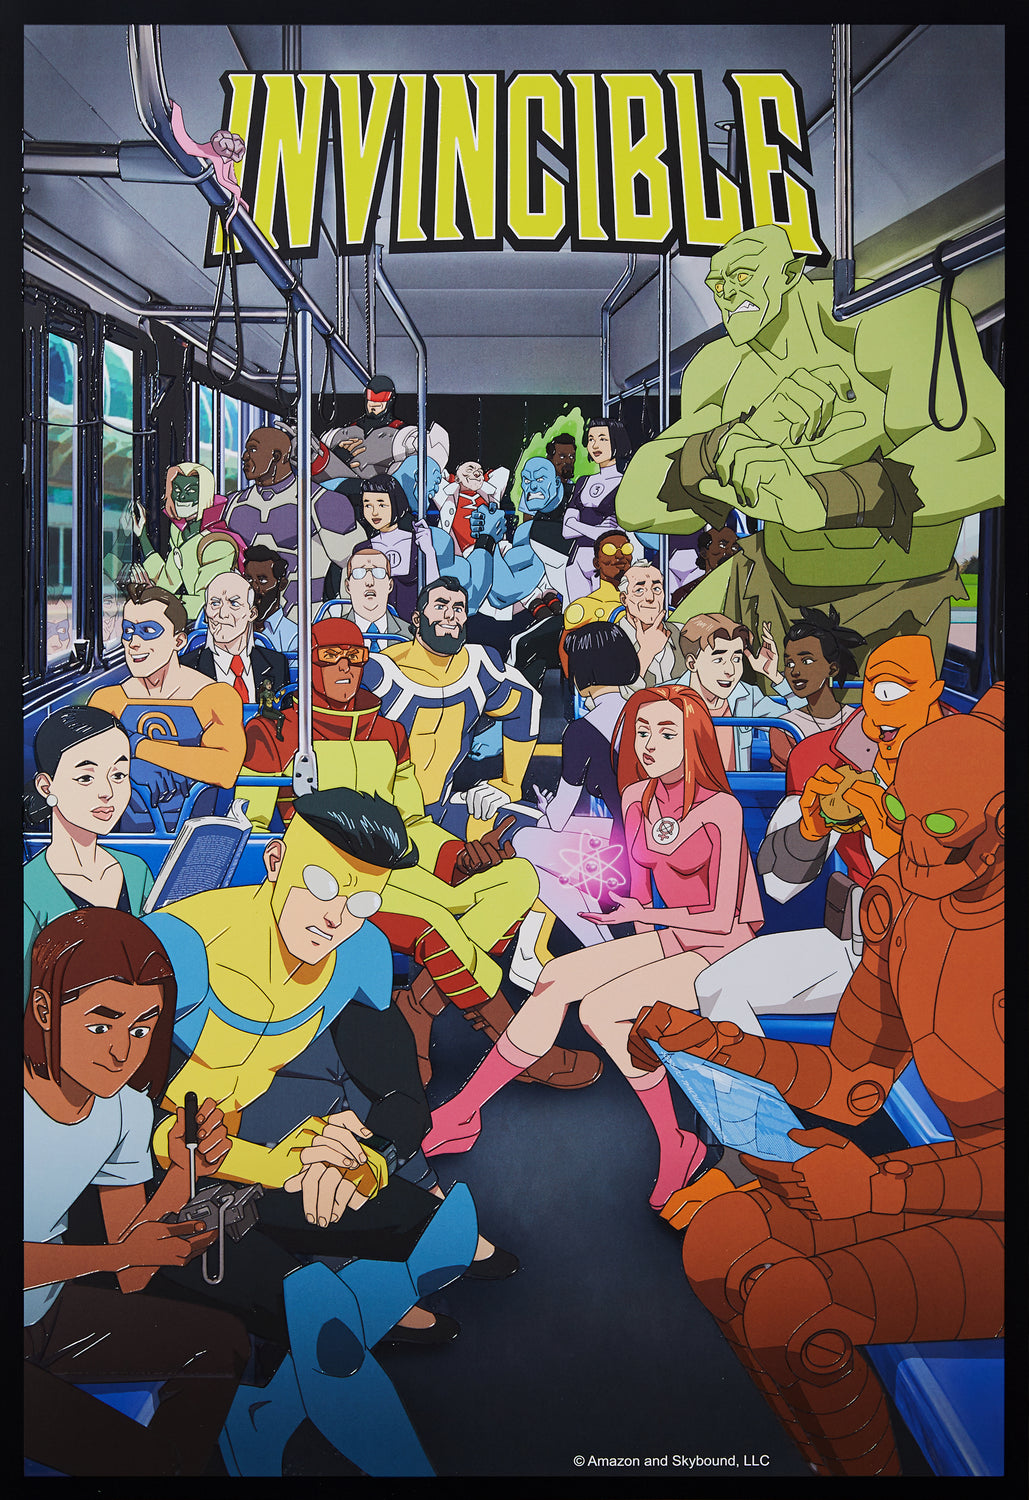 Invincible Season Two - Bus Limited Edition Foil Poster - Pre-Order